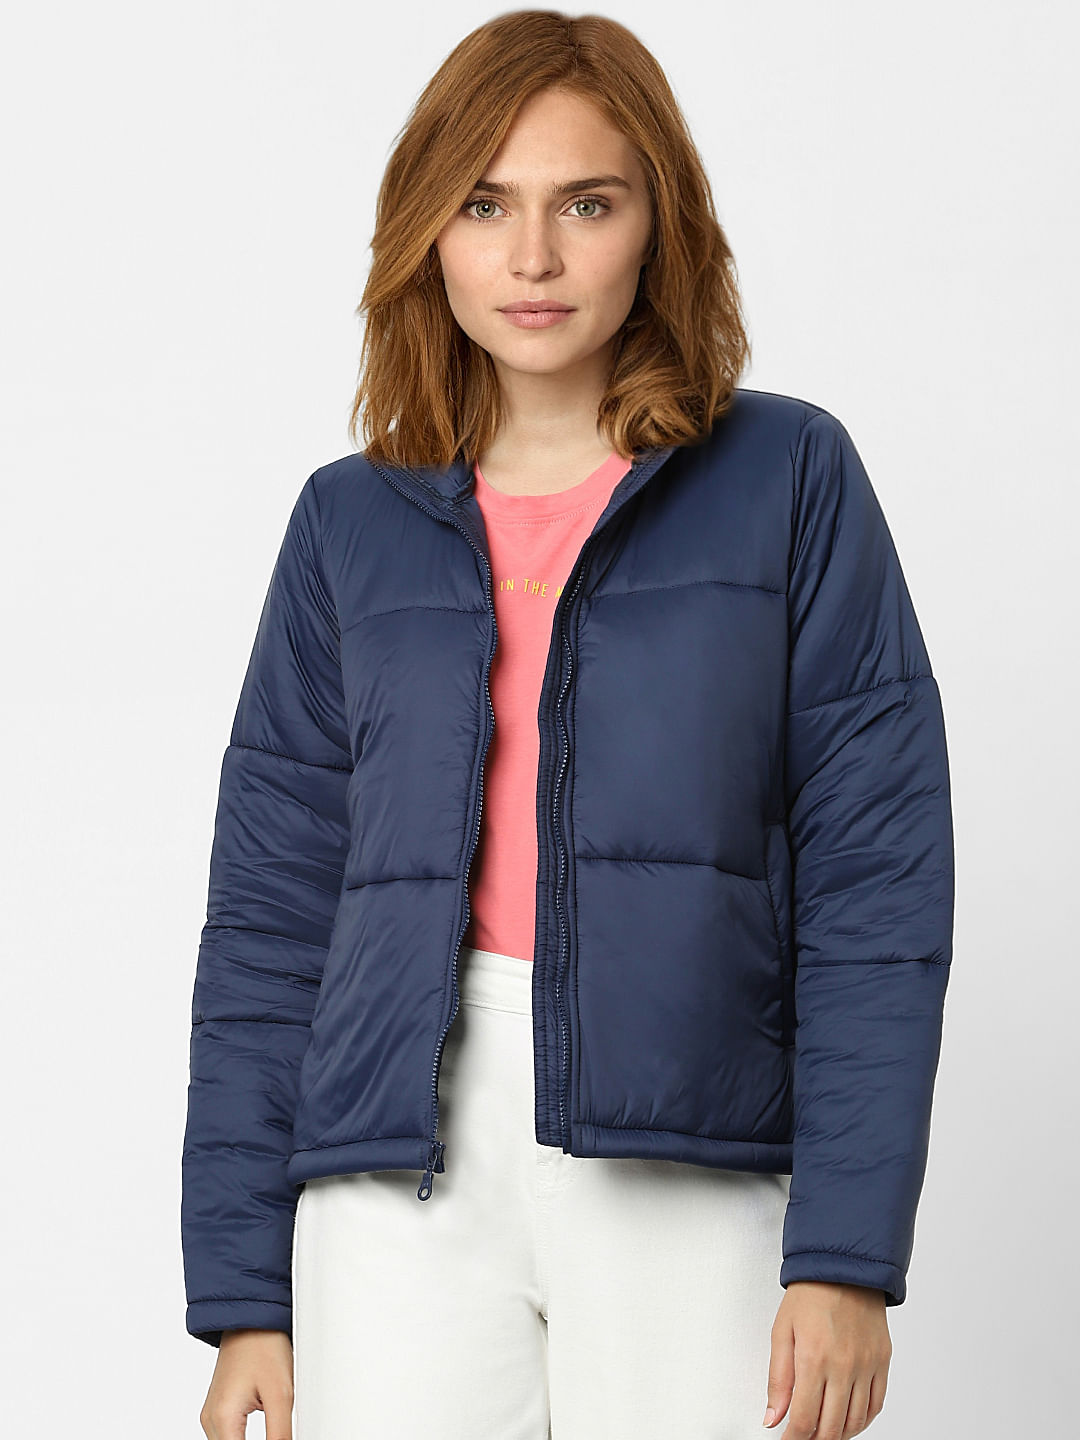 GAP jacket discount 89% WOMEN FASHION Jackets Casual Red XS 